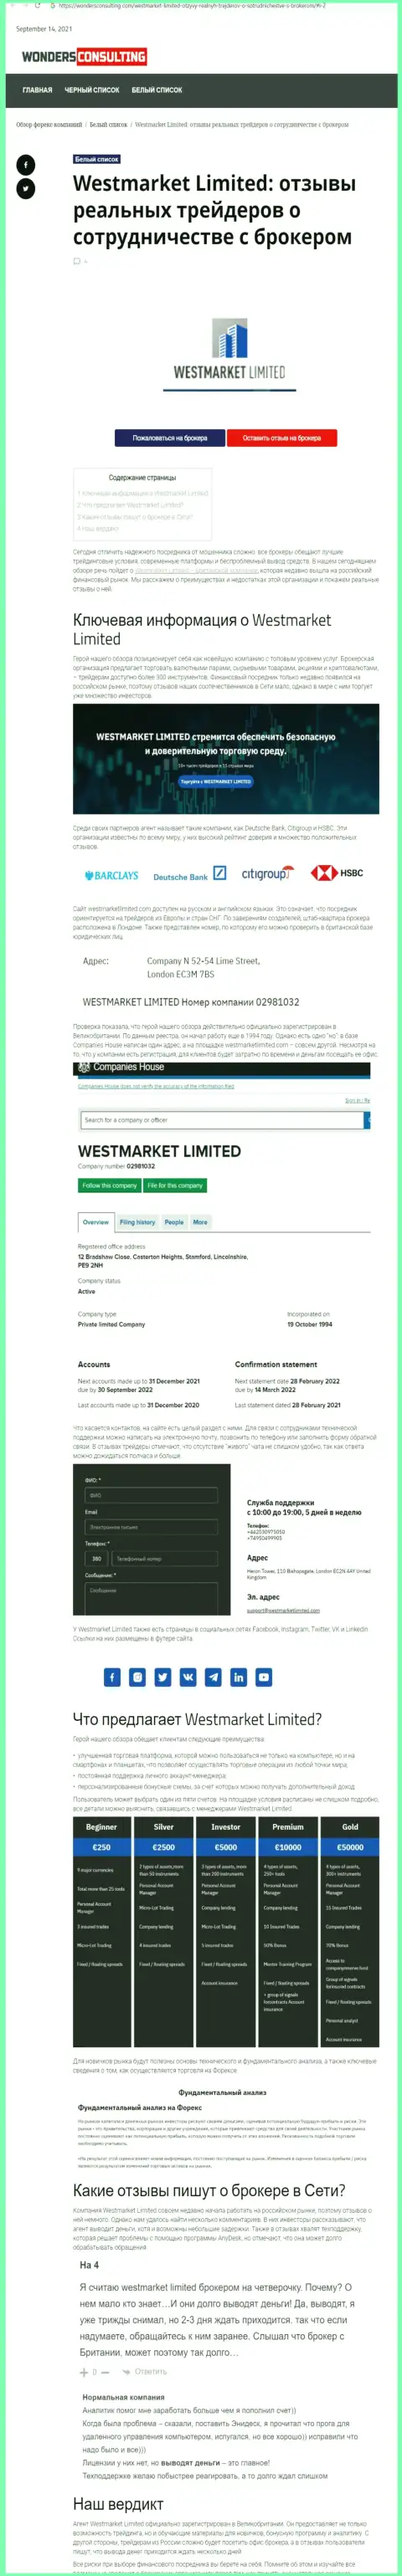 Информационный материал о форекс компании WestMarketLimited на онлайн-сервисе вондерконсалтинг ком